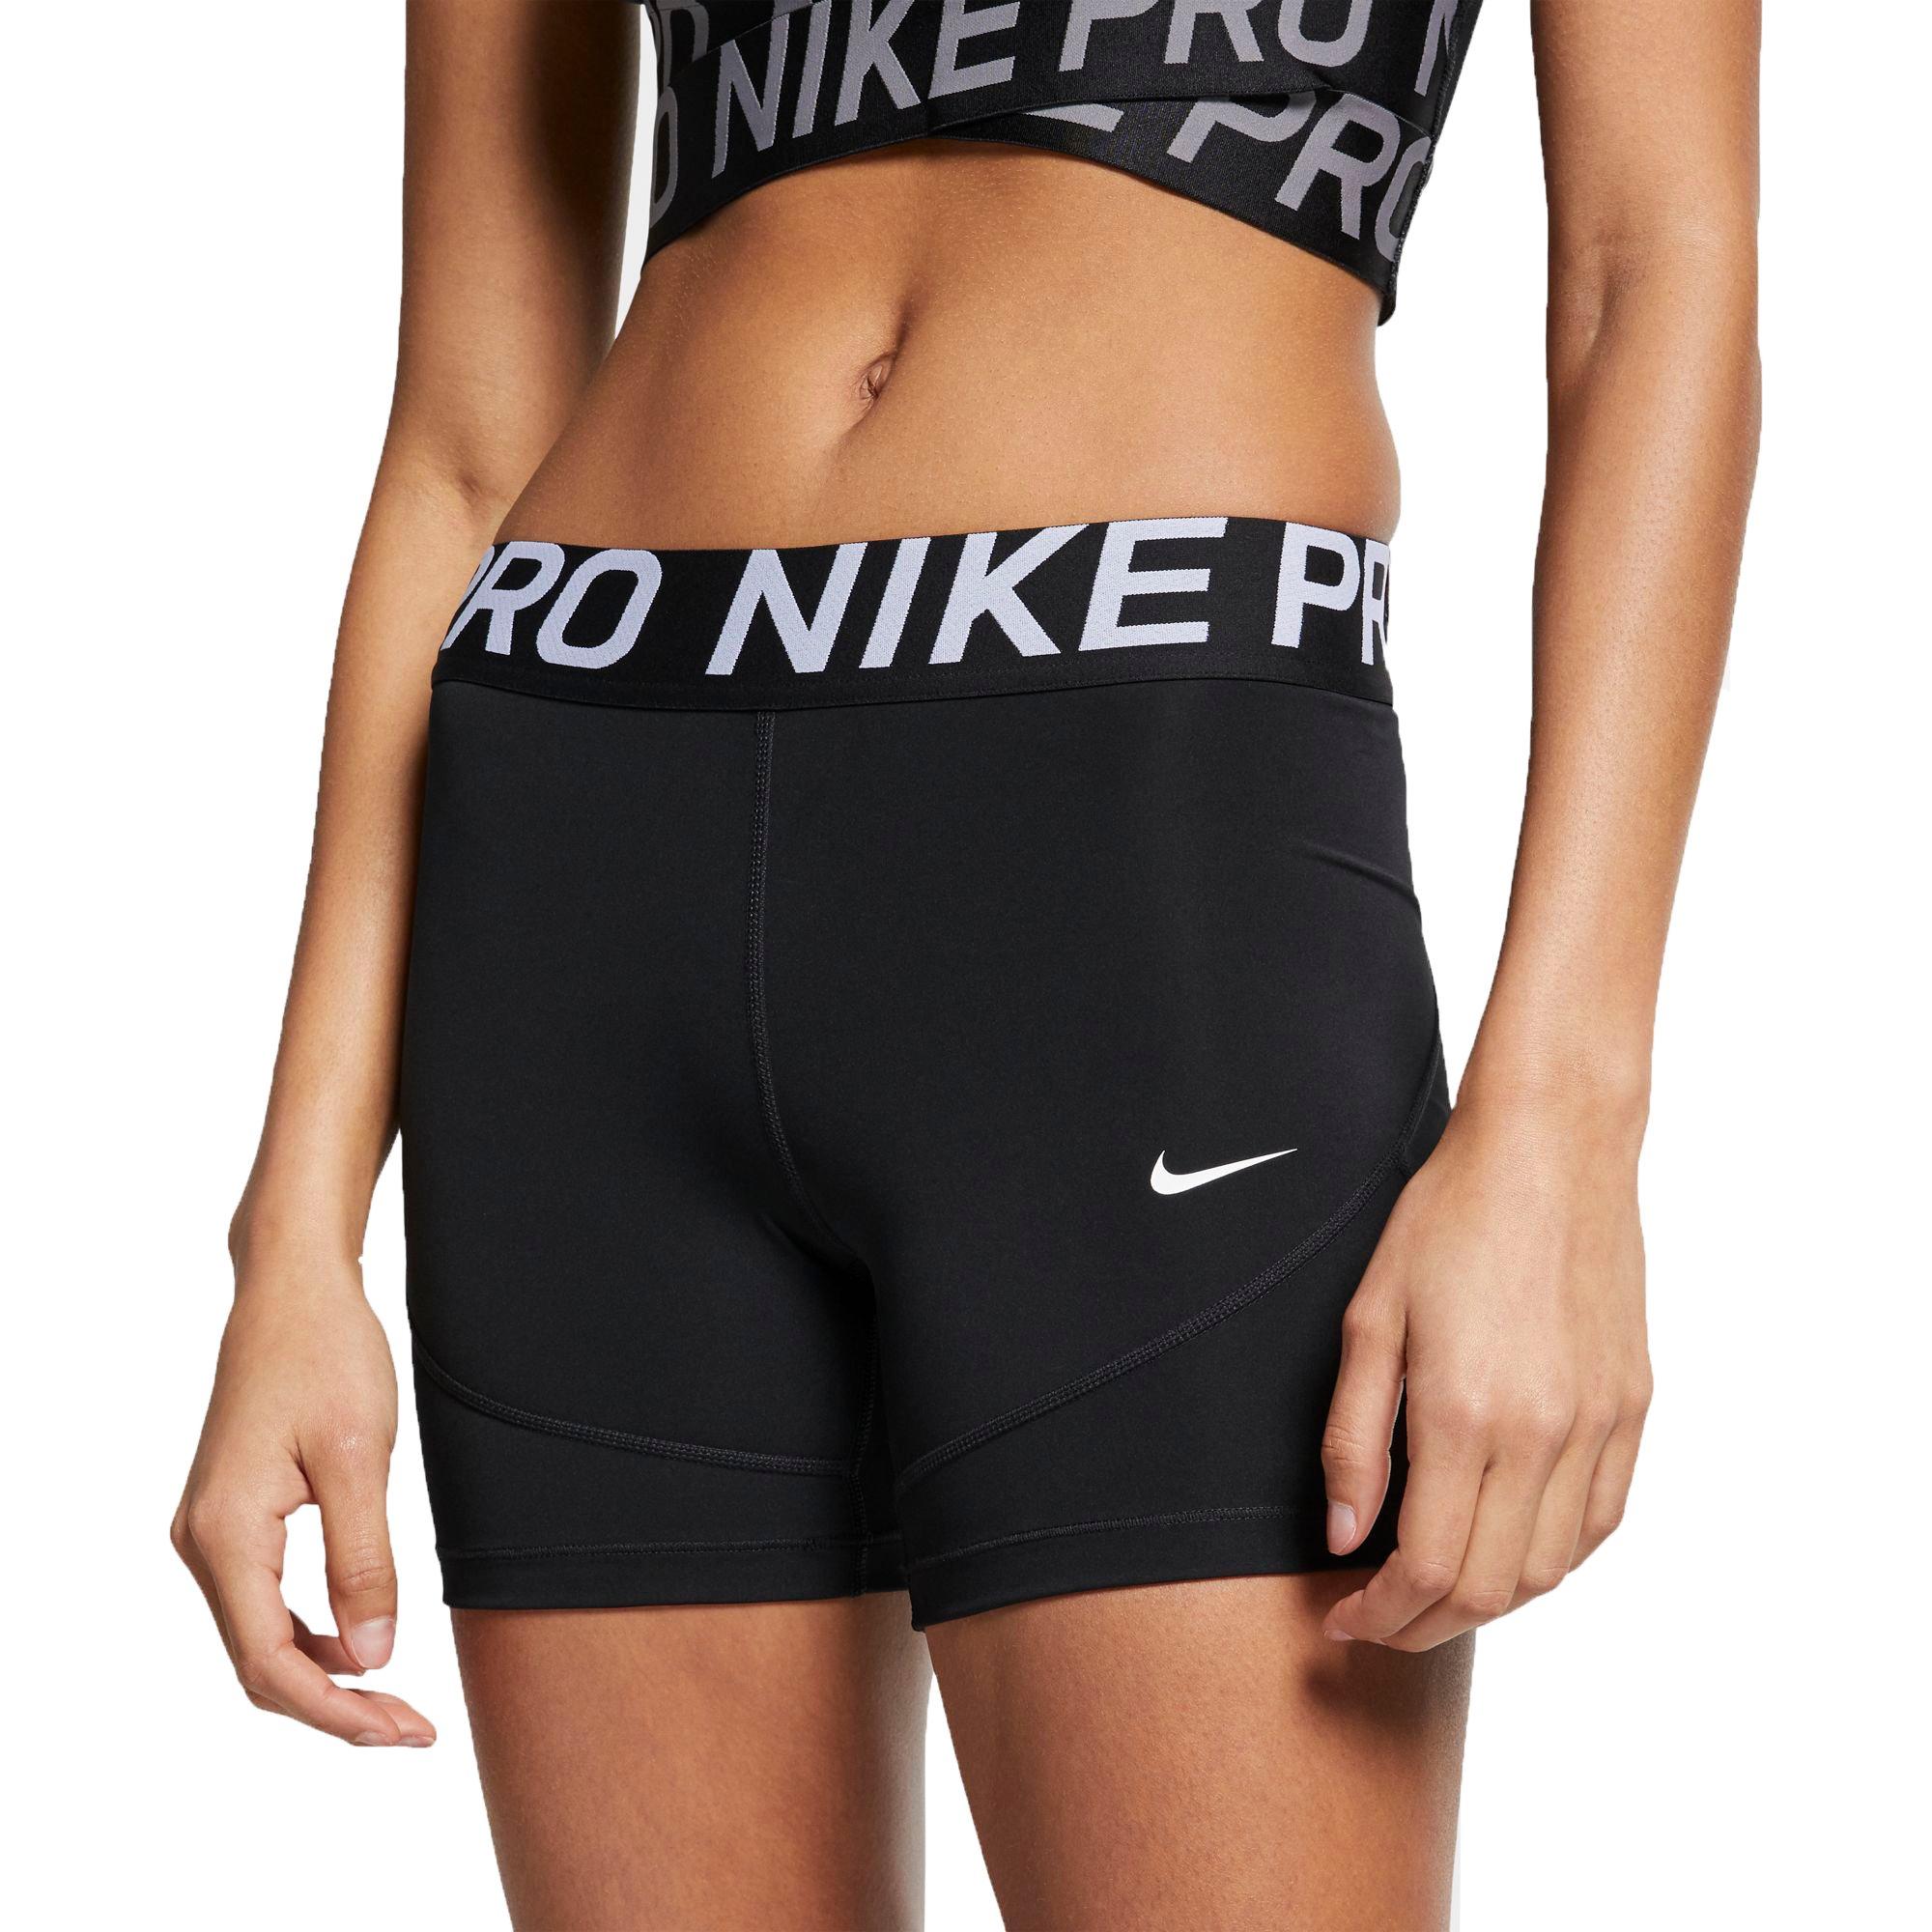 Nike Women S Pro 5 Training Shorts Black